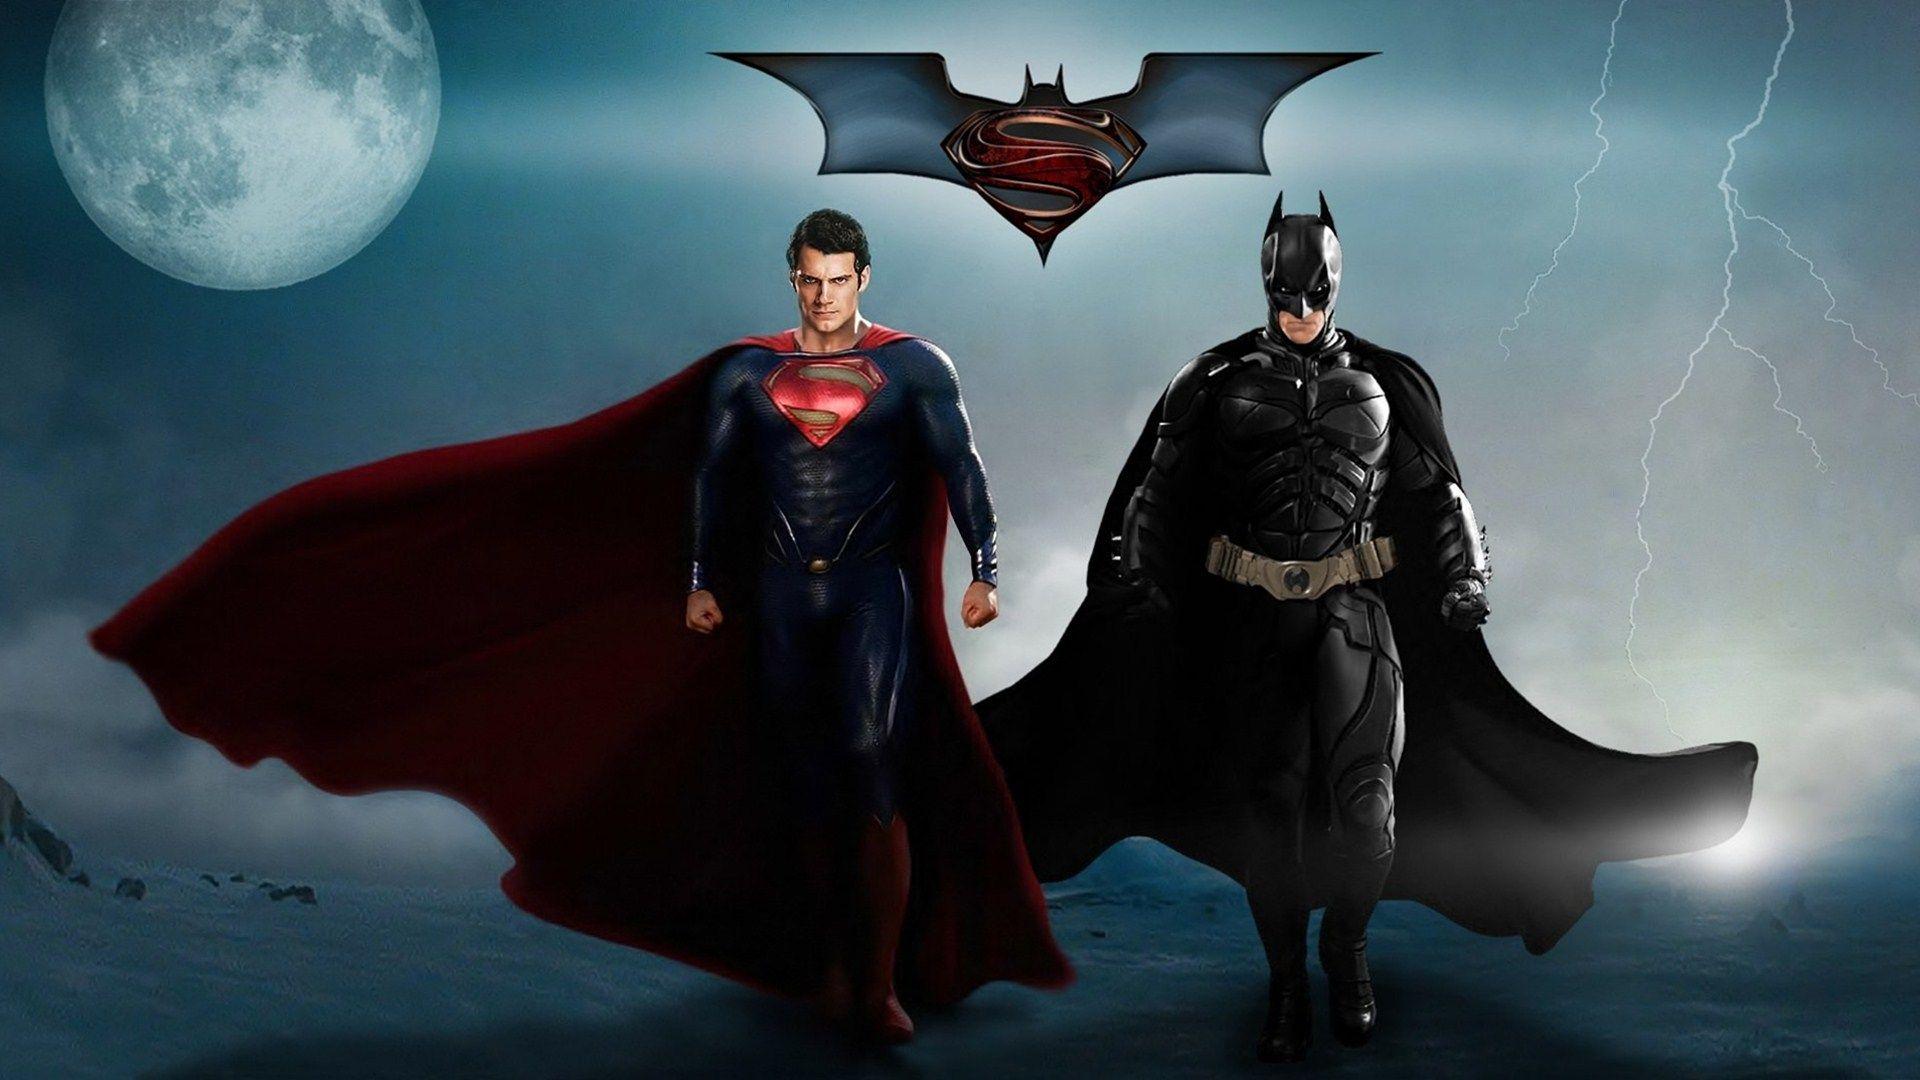 Batman vs Superman 2016 image Force